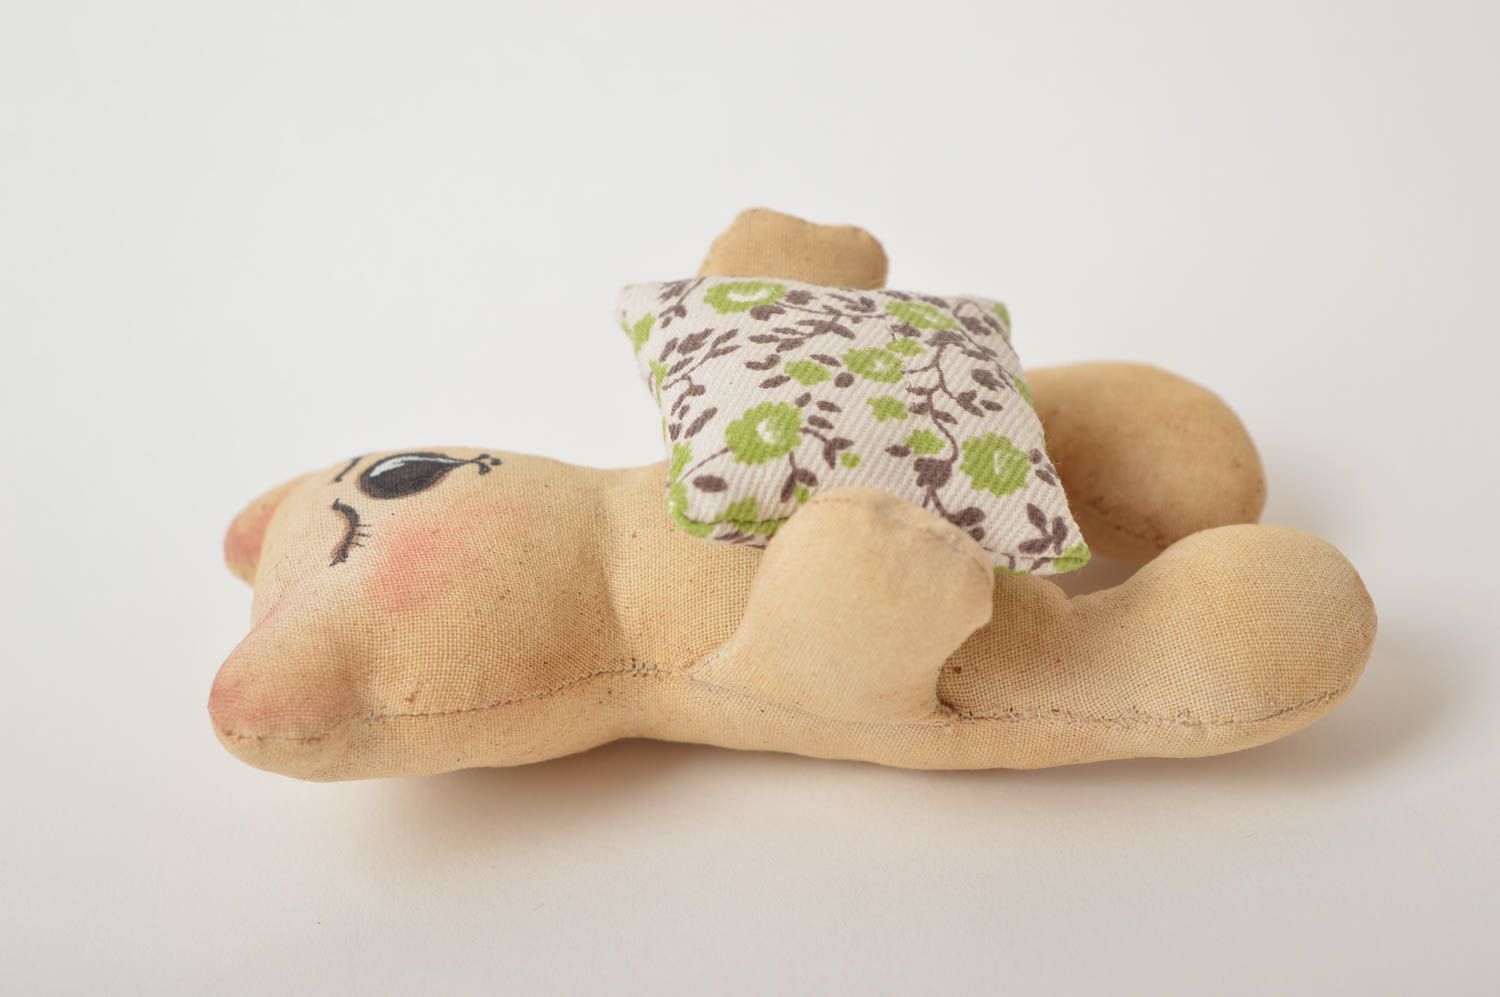 Decorative bunny toy handmade toy for children soft toy interior decor ideas photo 4